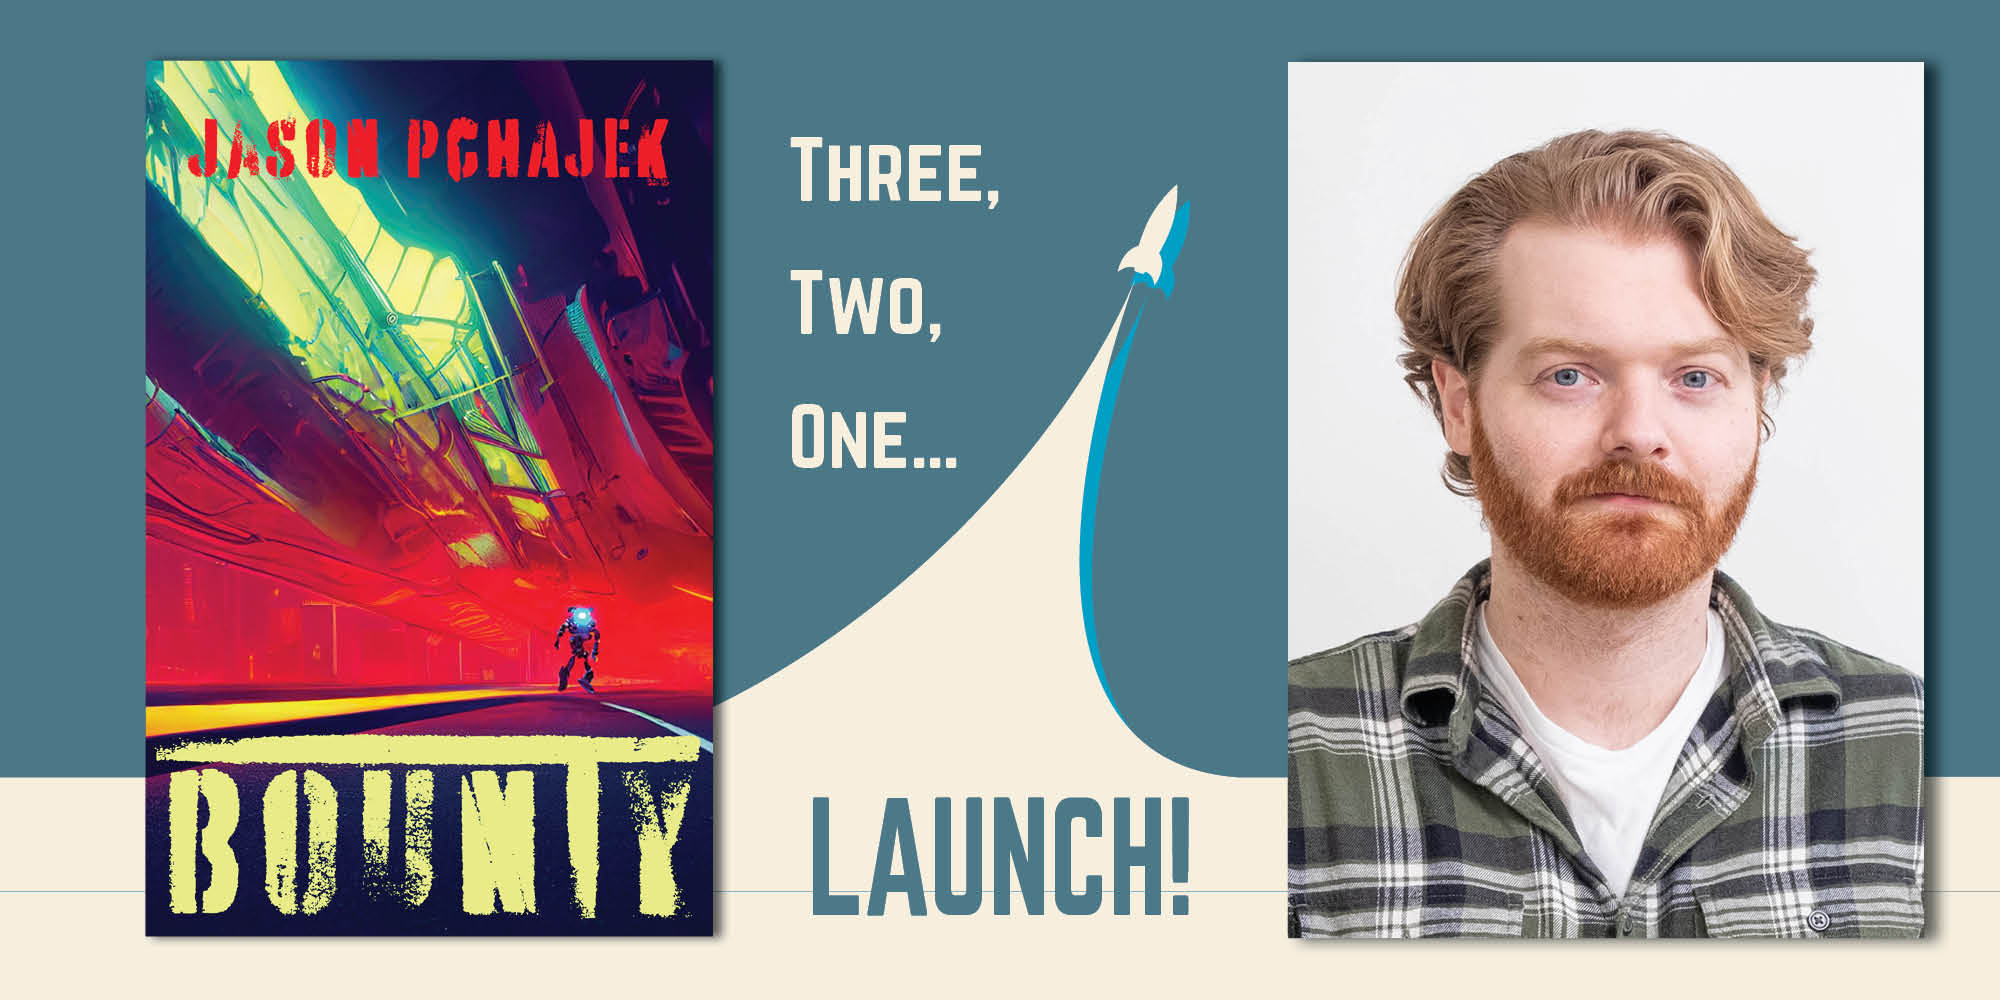 3-2-1 Launch Interview: Jason Pchajek launches Bounty